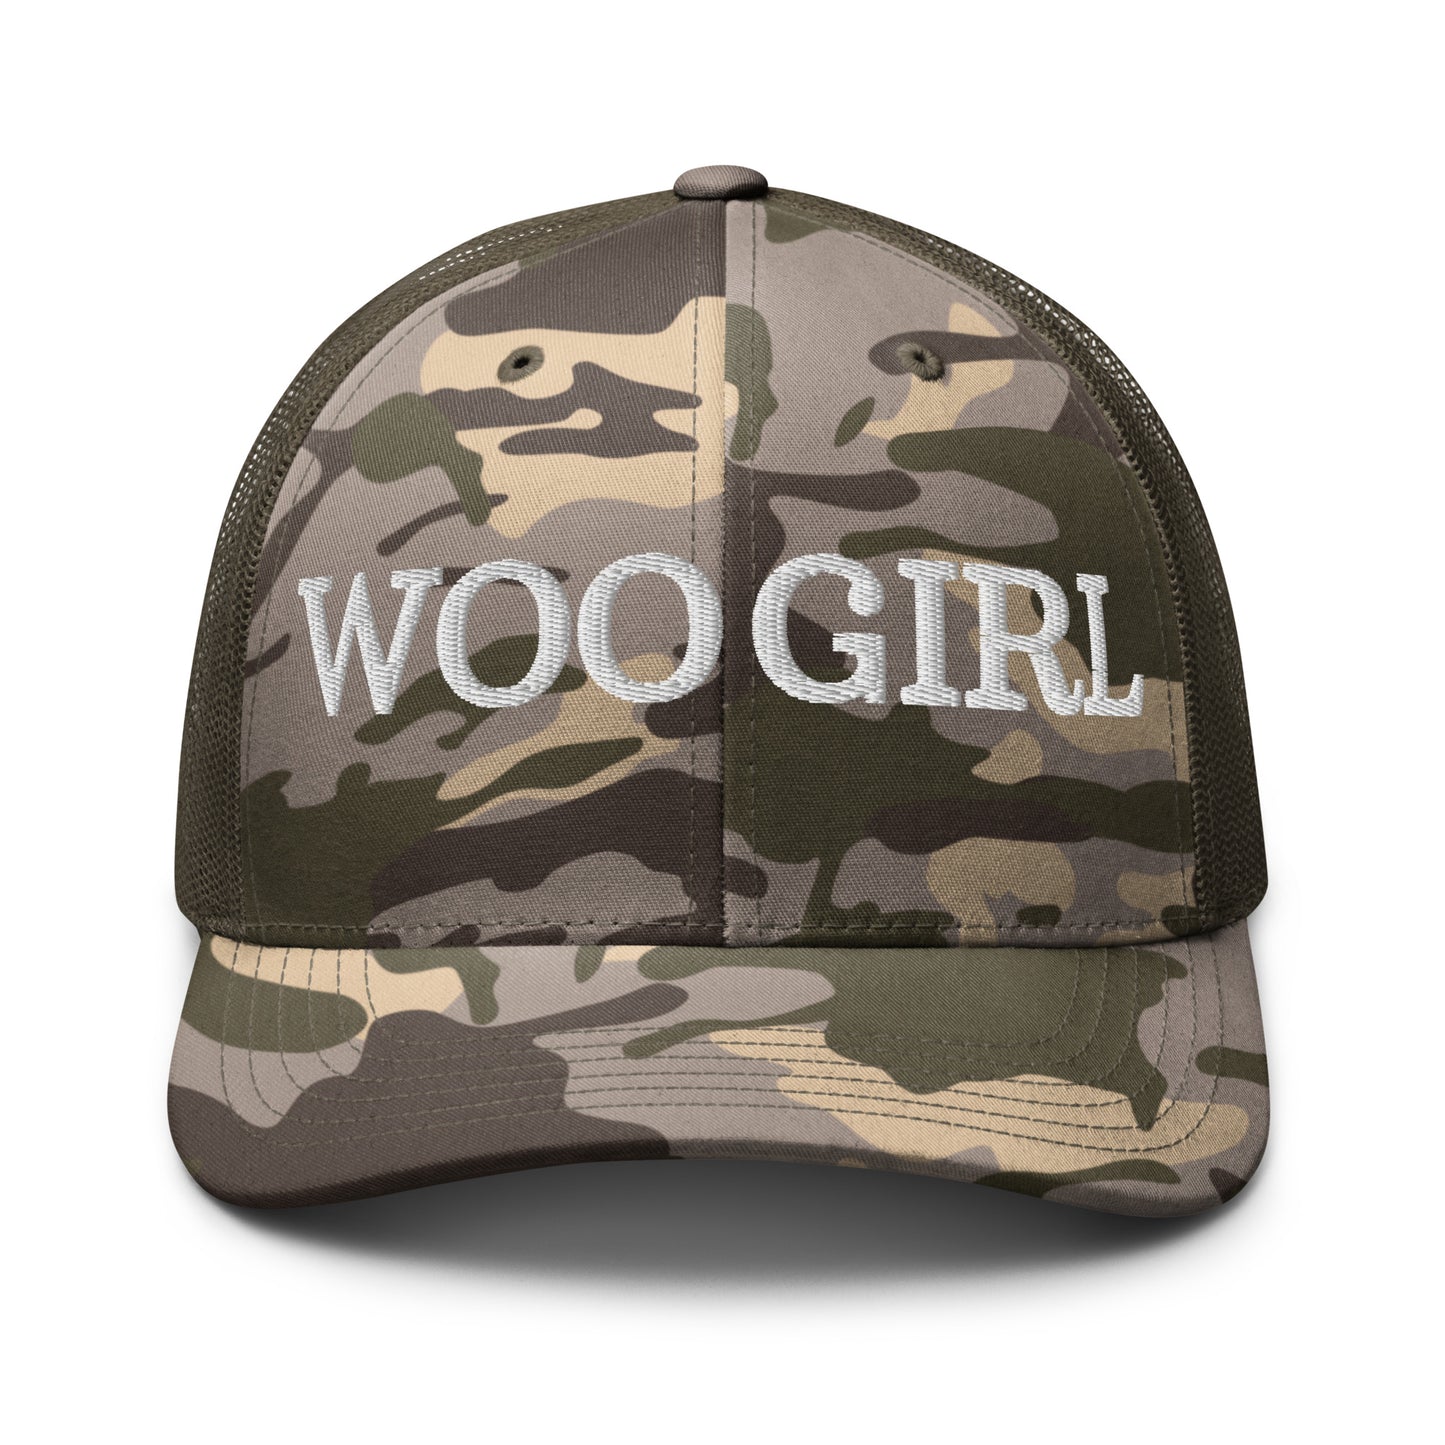 WOO GIRL Camouflage Trucker Hat (white lettering)